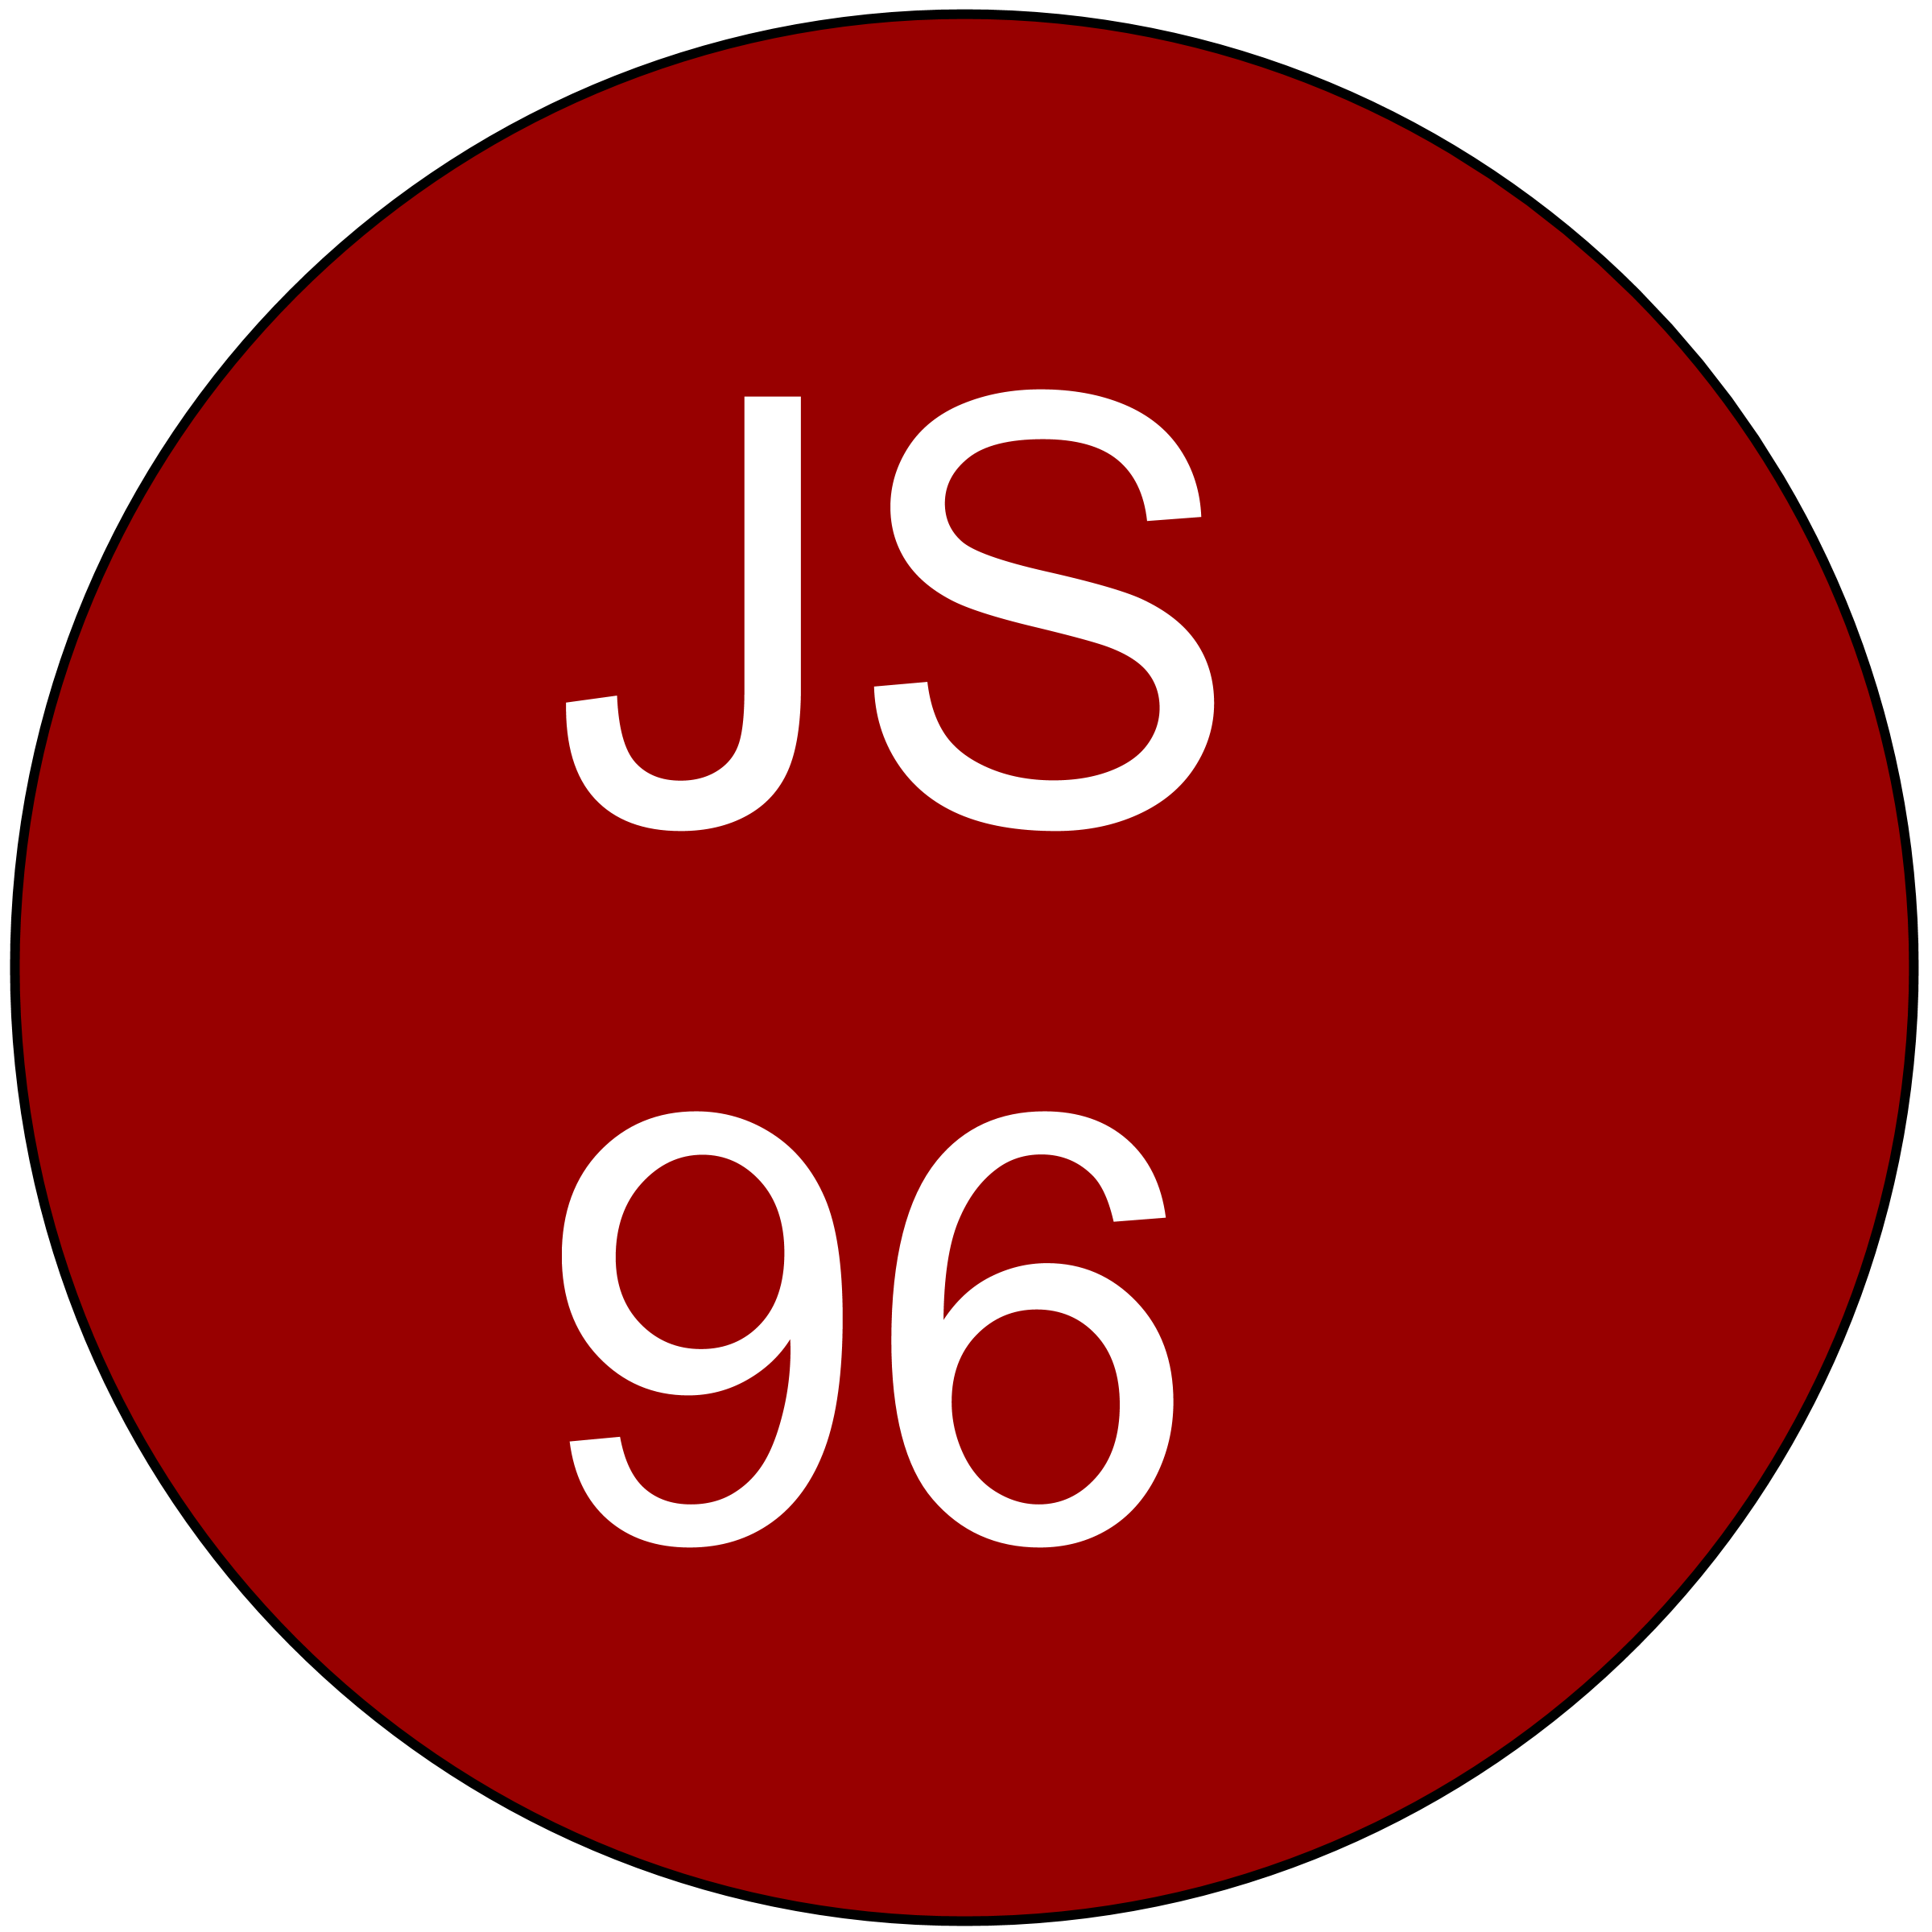 james-suckling-96-ratings